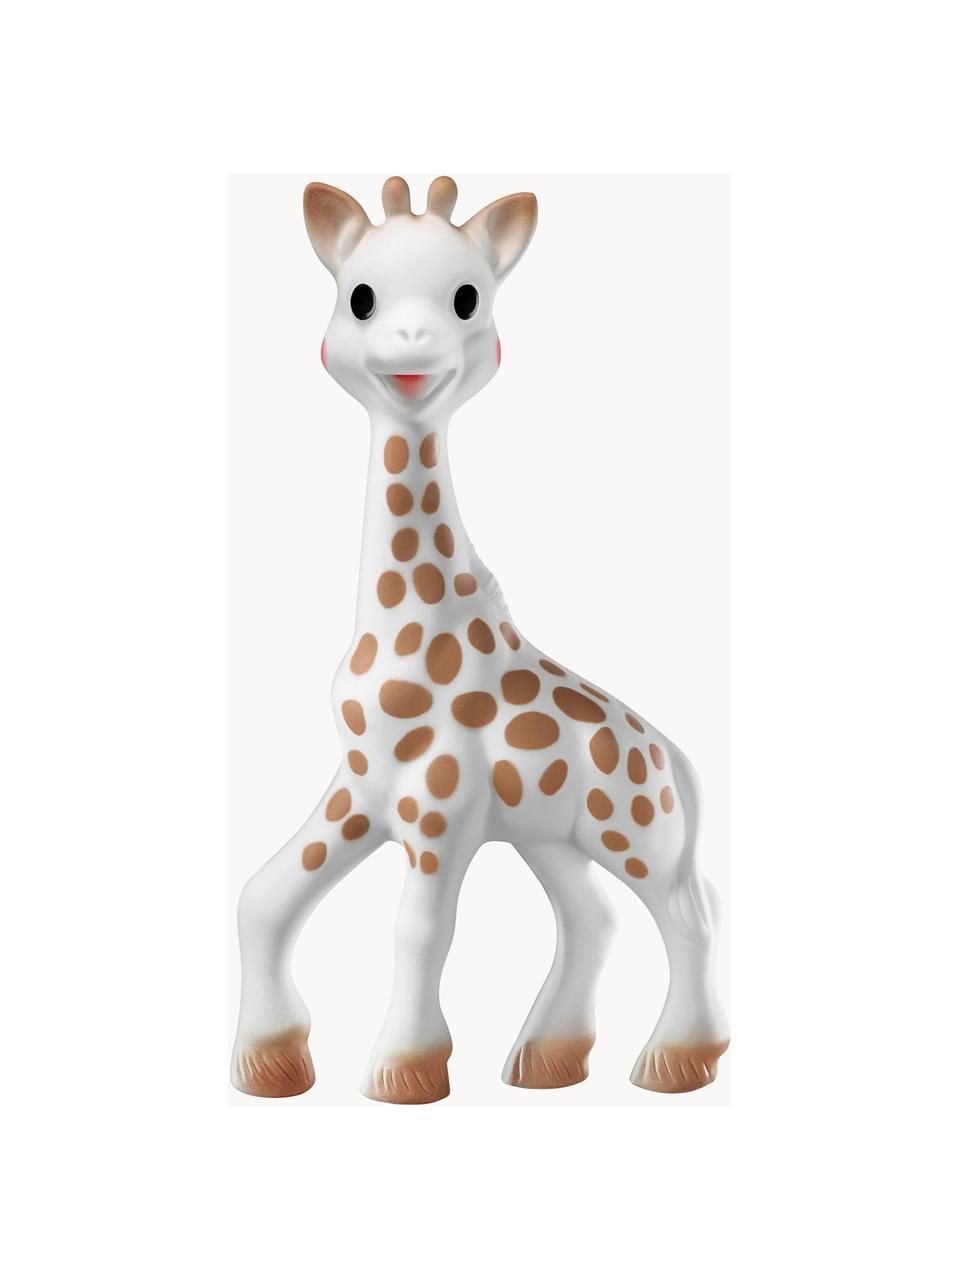 Giocattolo Sophie la girafe, 100% gomma naturale, Bianco, marrone, Larg. 10 x Alt. 18 cm